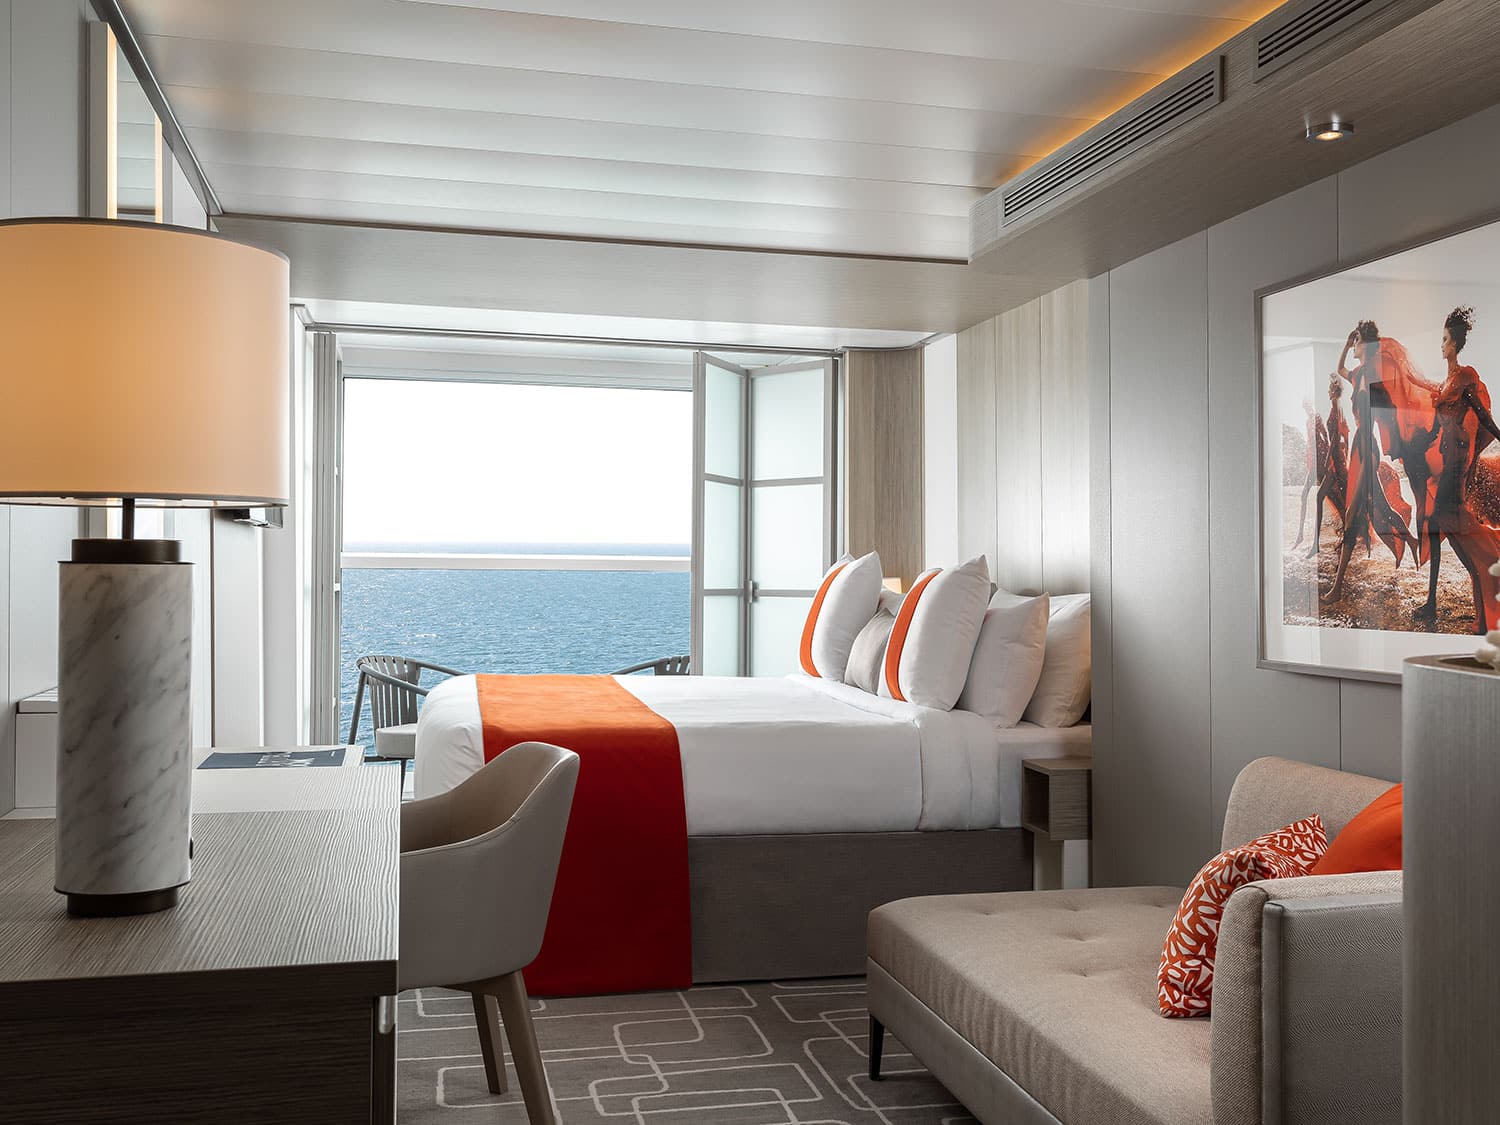 The interior view of the Celebrity Beyond cruise ship’s Edge-class Infinite Veranda stateroom.